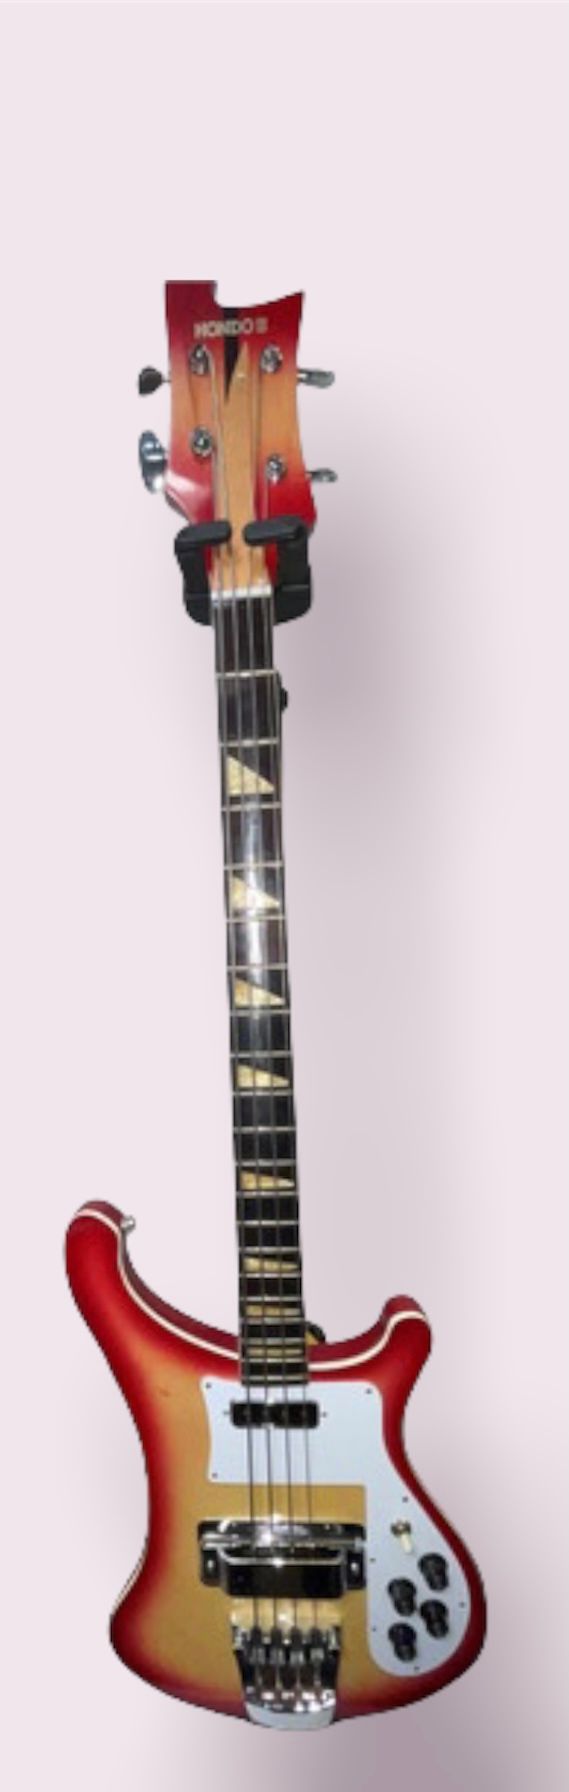 Null 电子低音吉他，HONDO II，里肯贝克的副本

奶油渐变红，编号HRB-2S，韩国制造